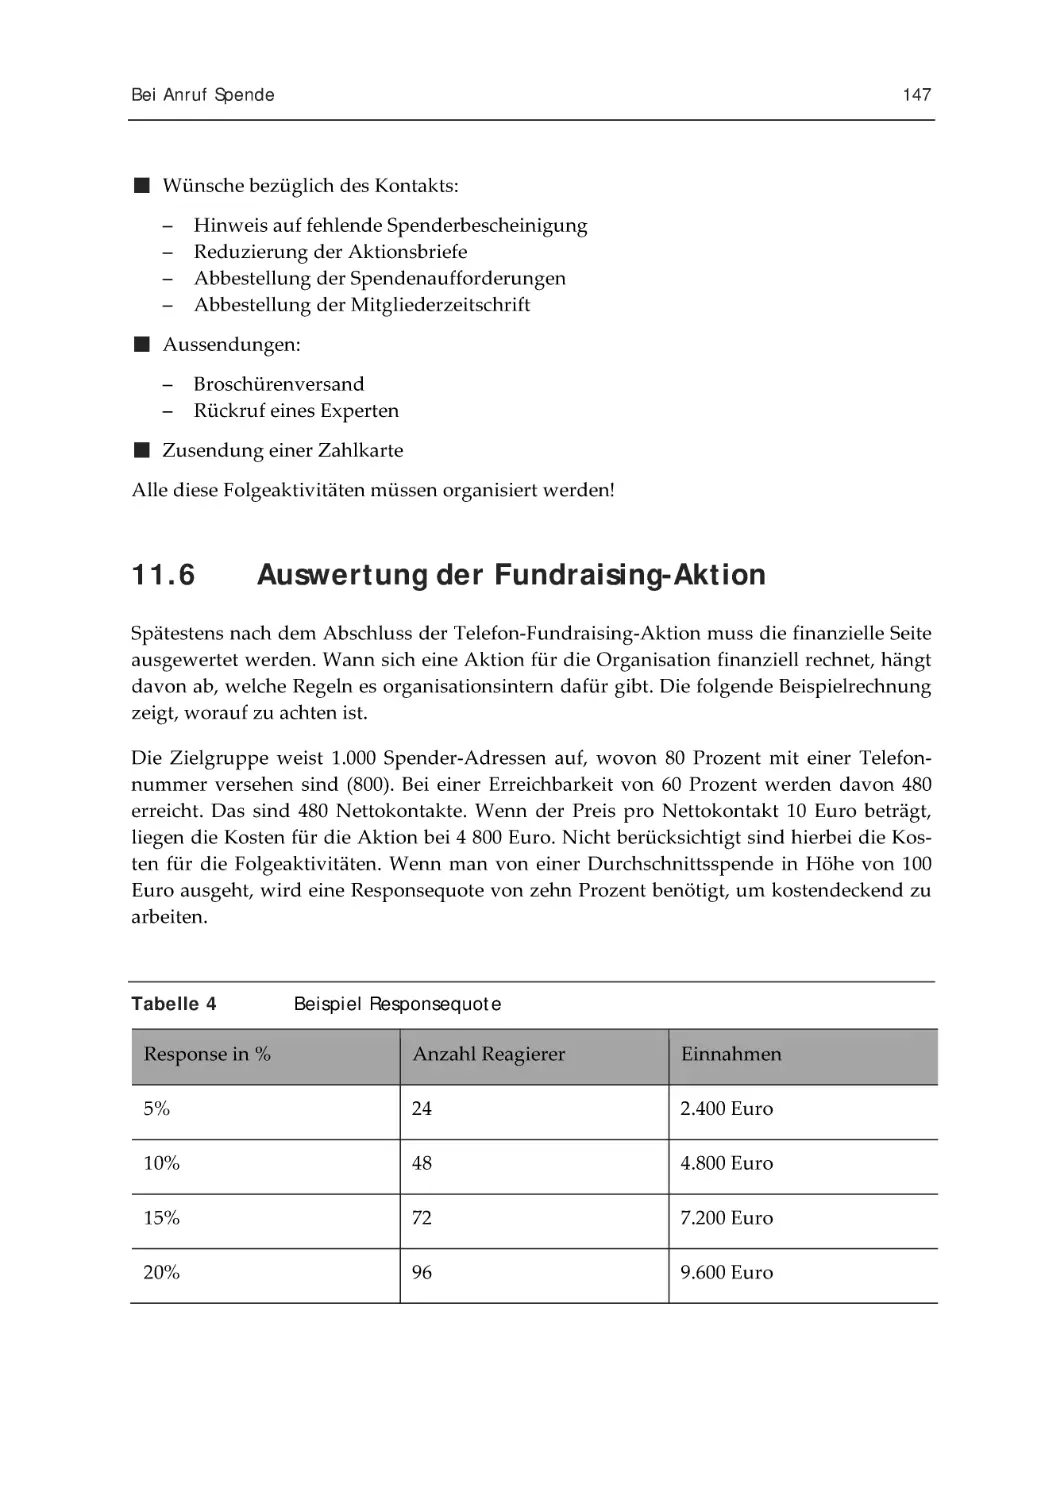 11.6 Auswertung der Fundraising-Aktion